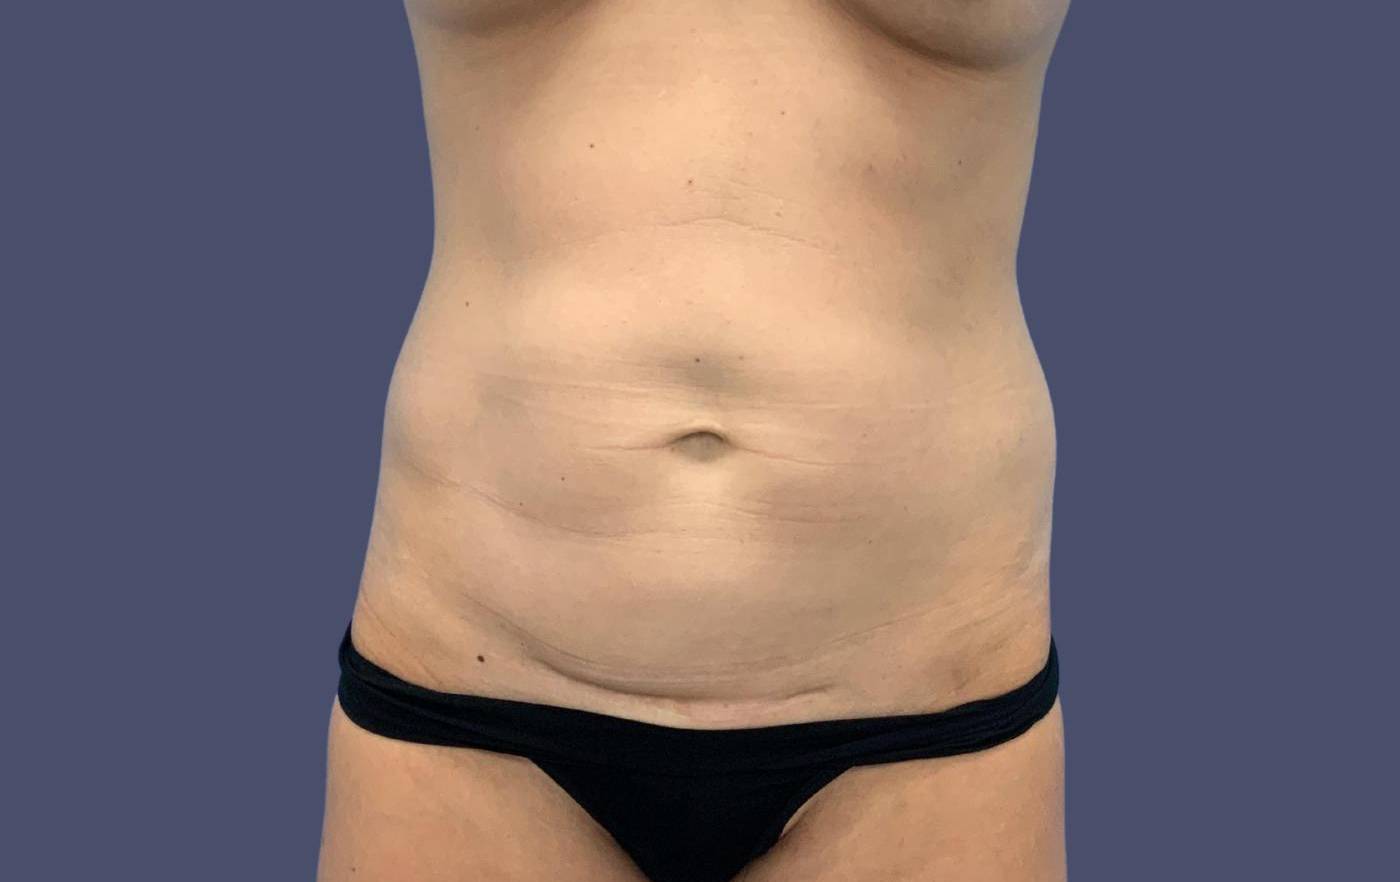 Abdominoplasty (Tummy Tuck) 13 Before